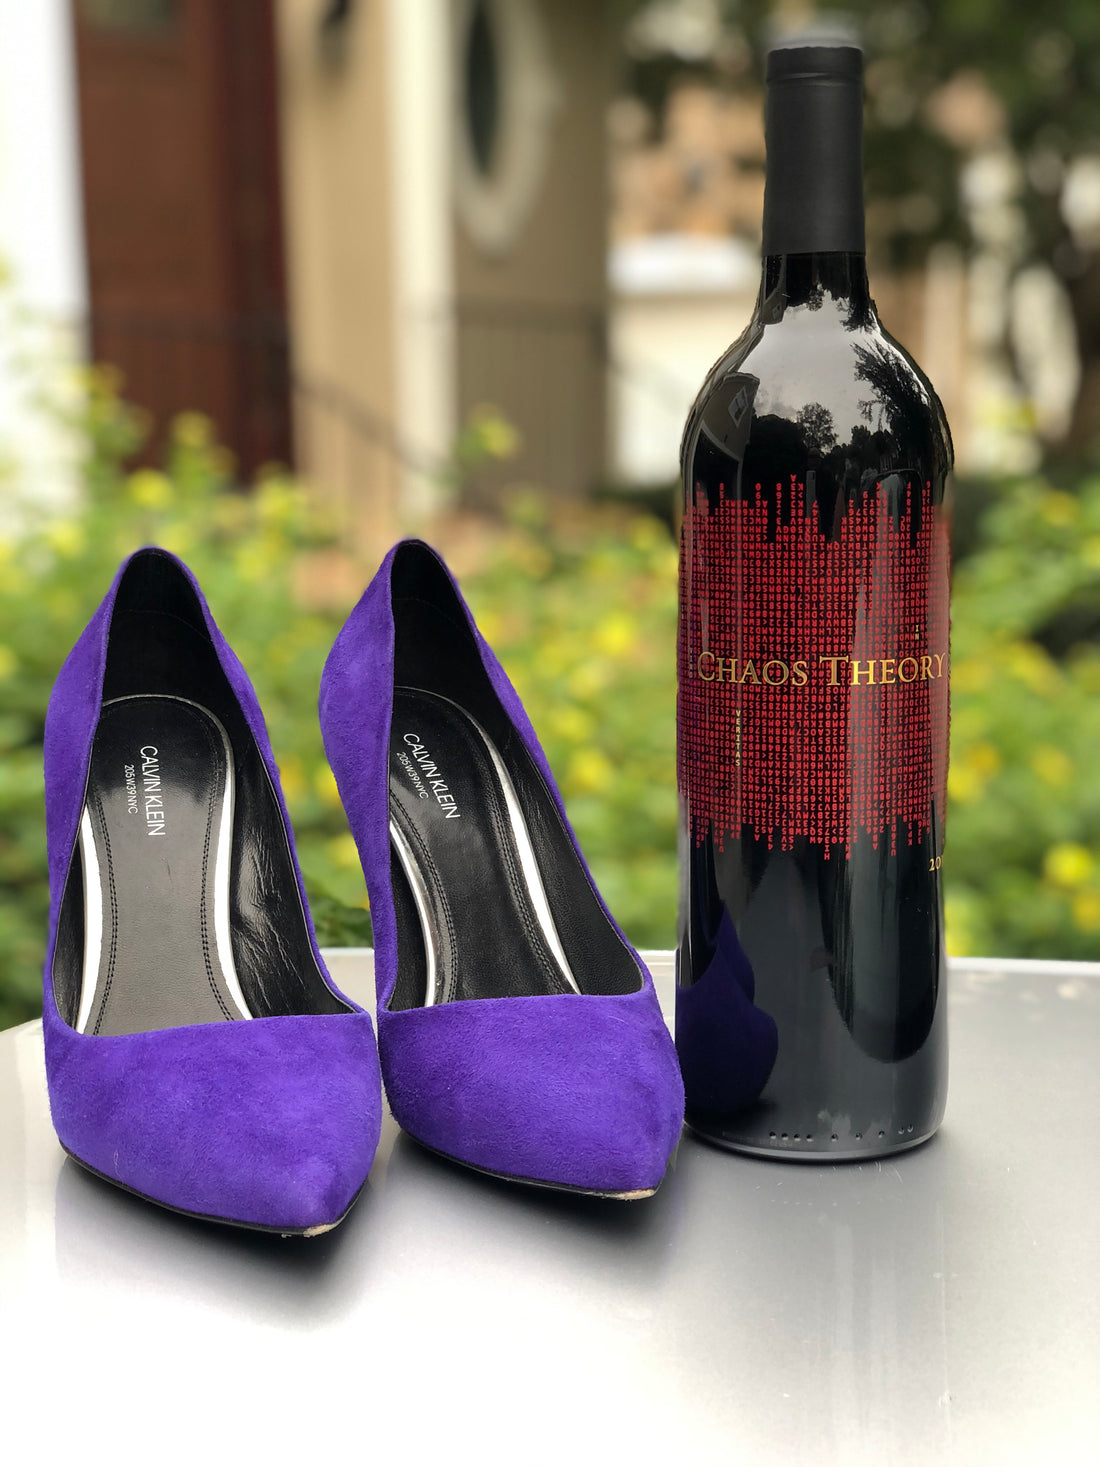 Calvin Klein Pumps and Brown Estate Wine - Wine IsShoes Blog - eKlozet Luxury Consignment Boutique